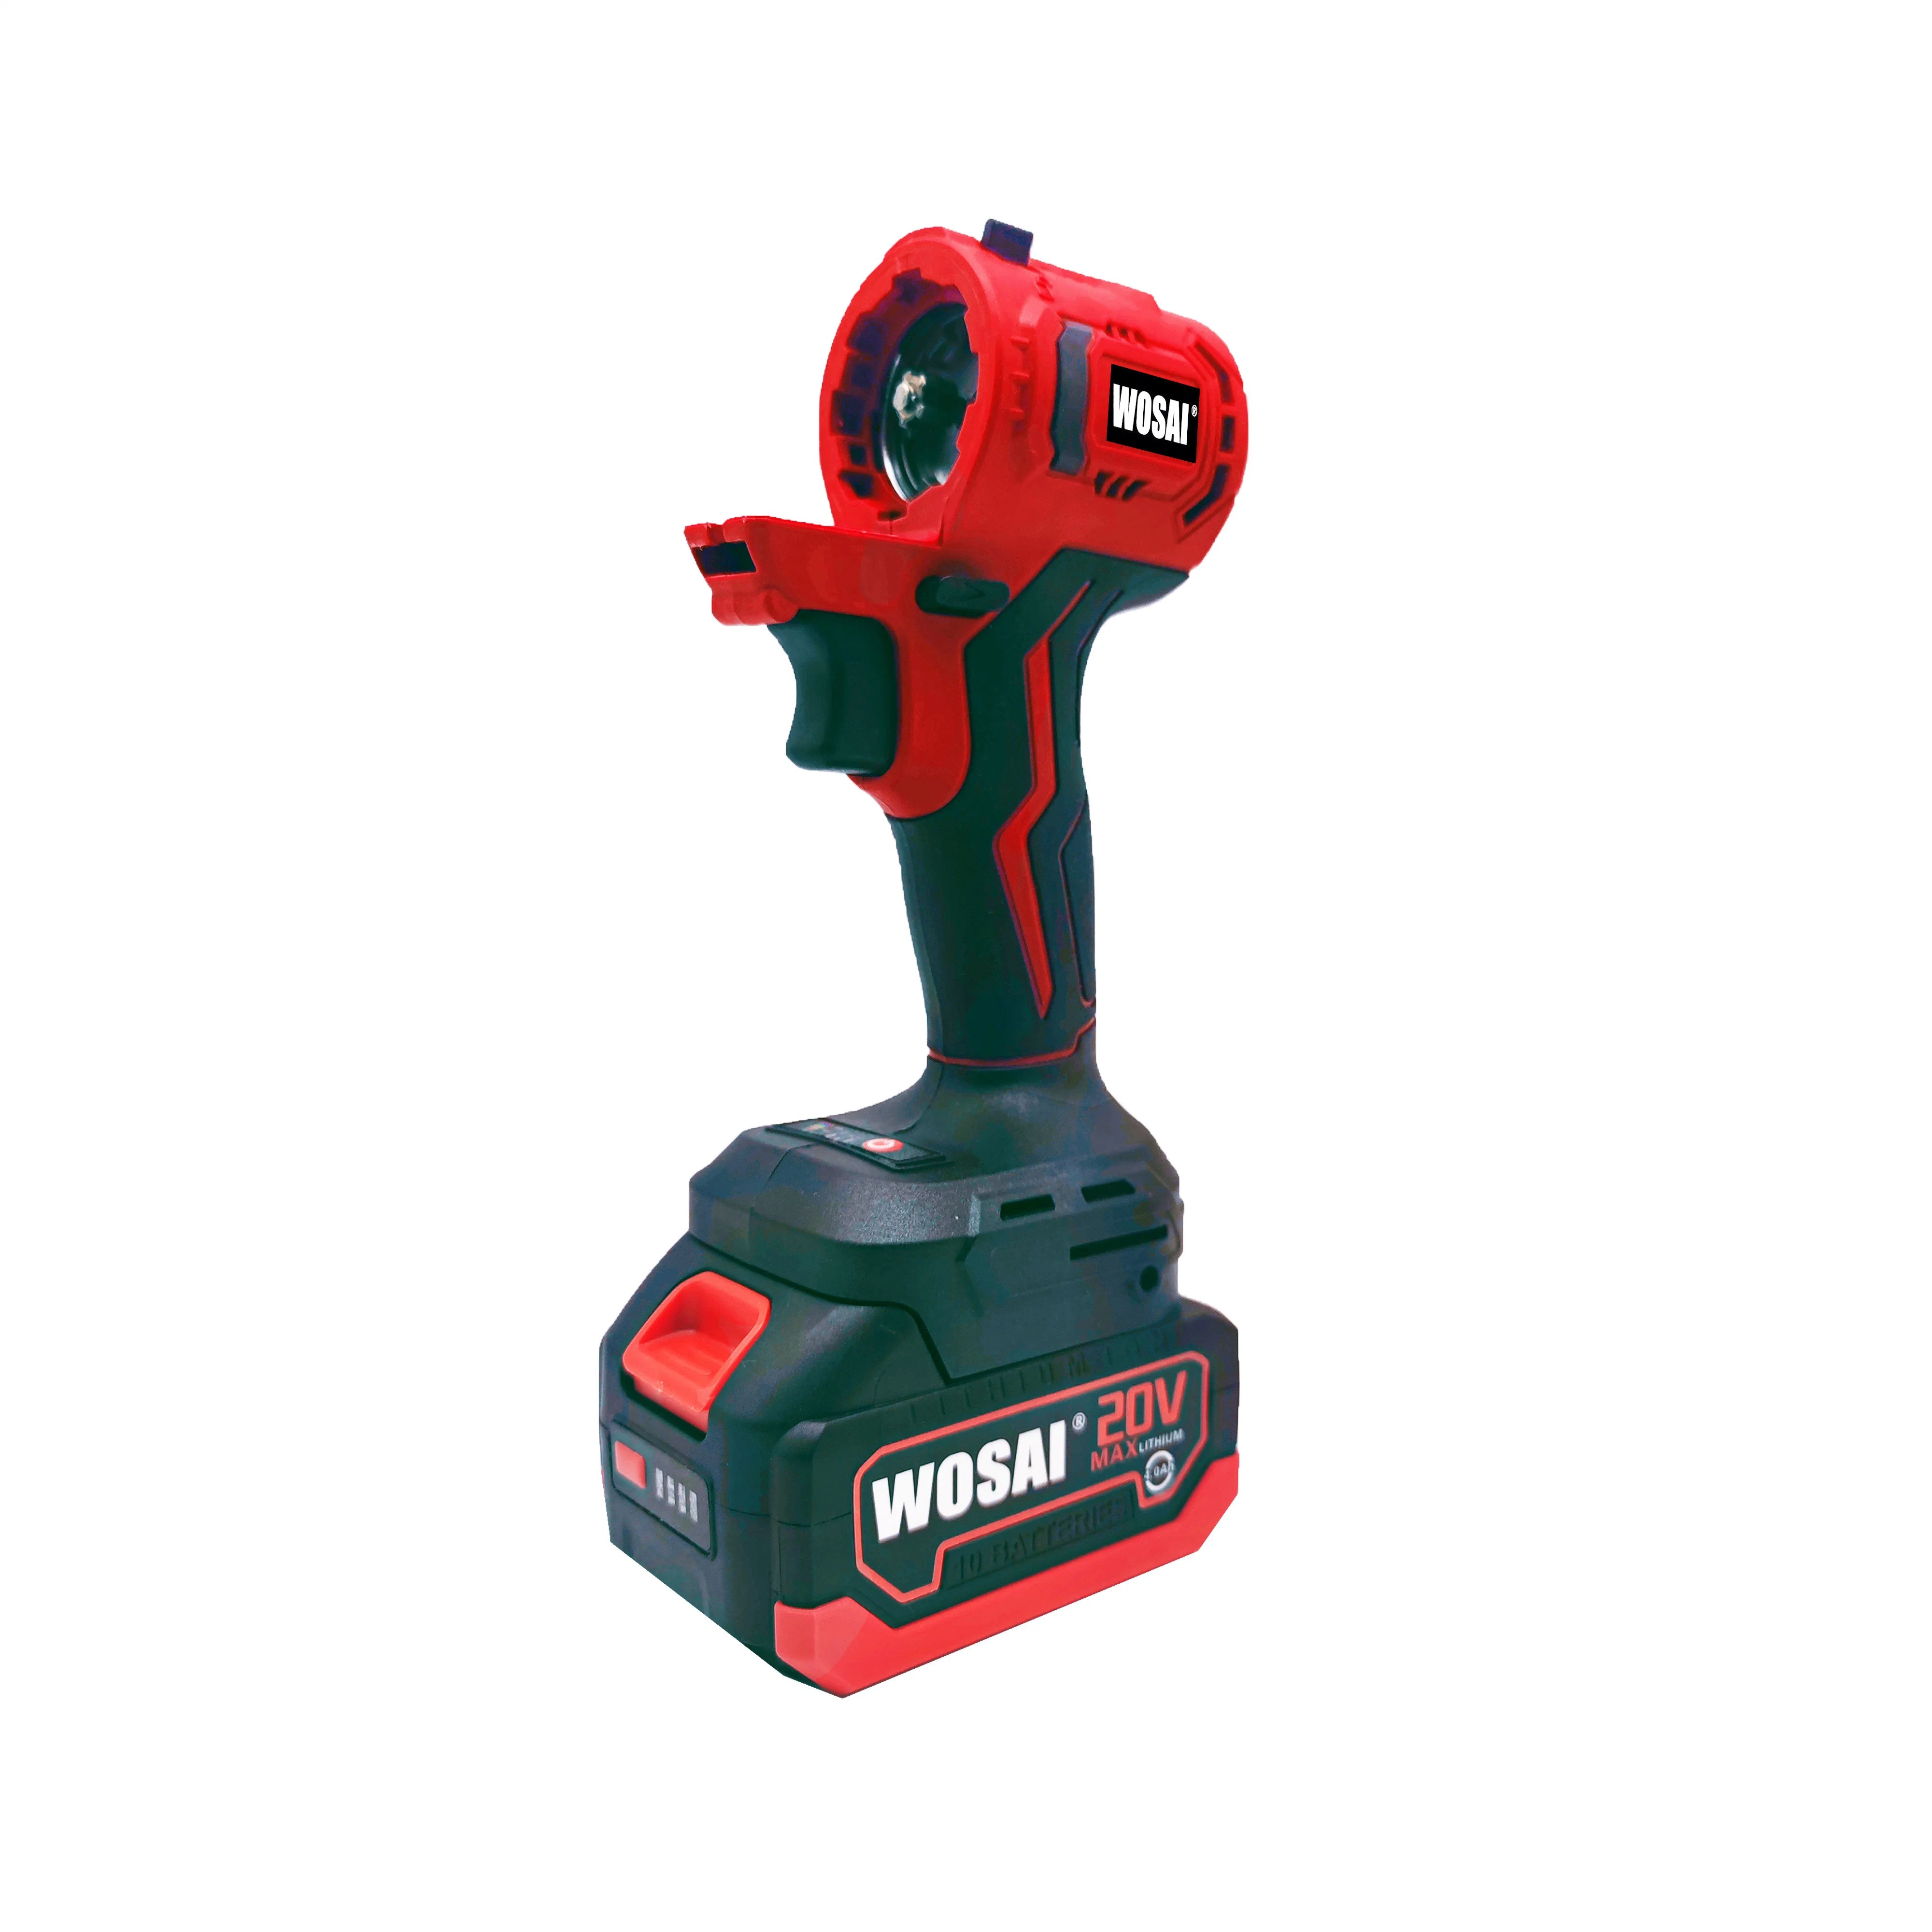 Wosai 20V Cordless Electric Power Tools Combo Set Professional Tool Kit Set Tool Box Set